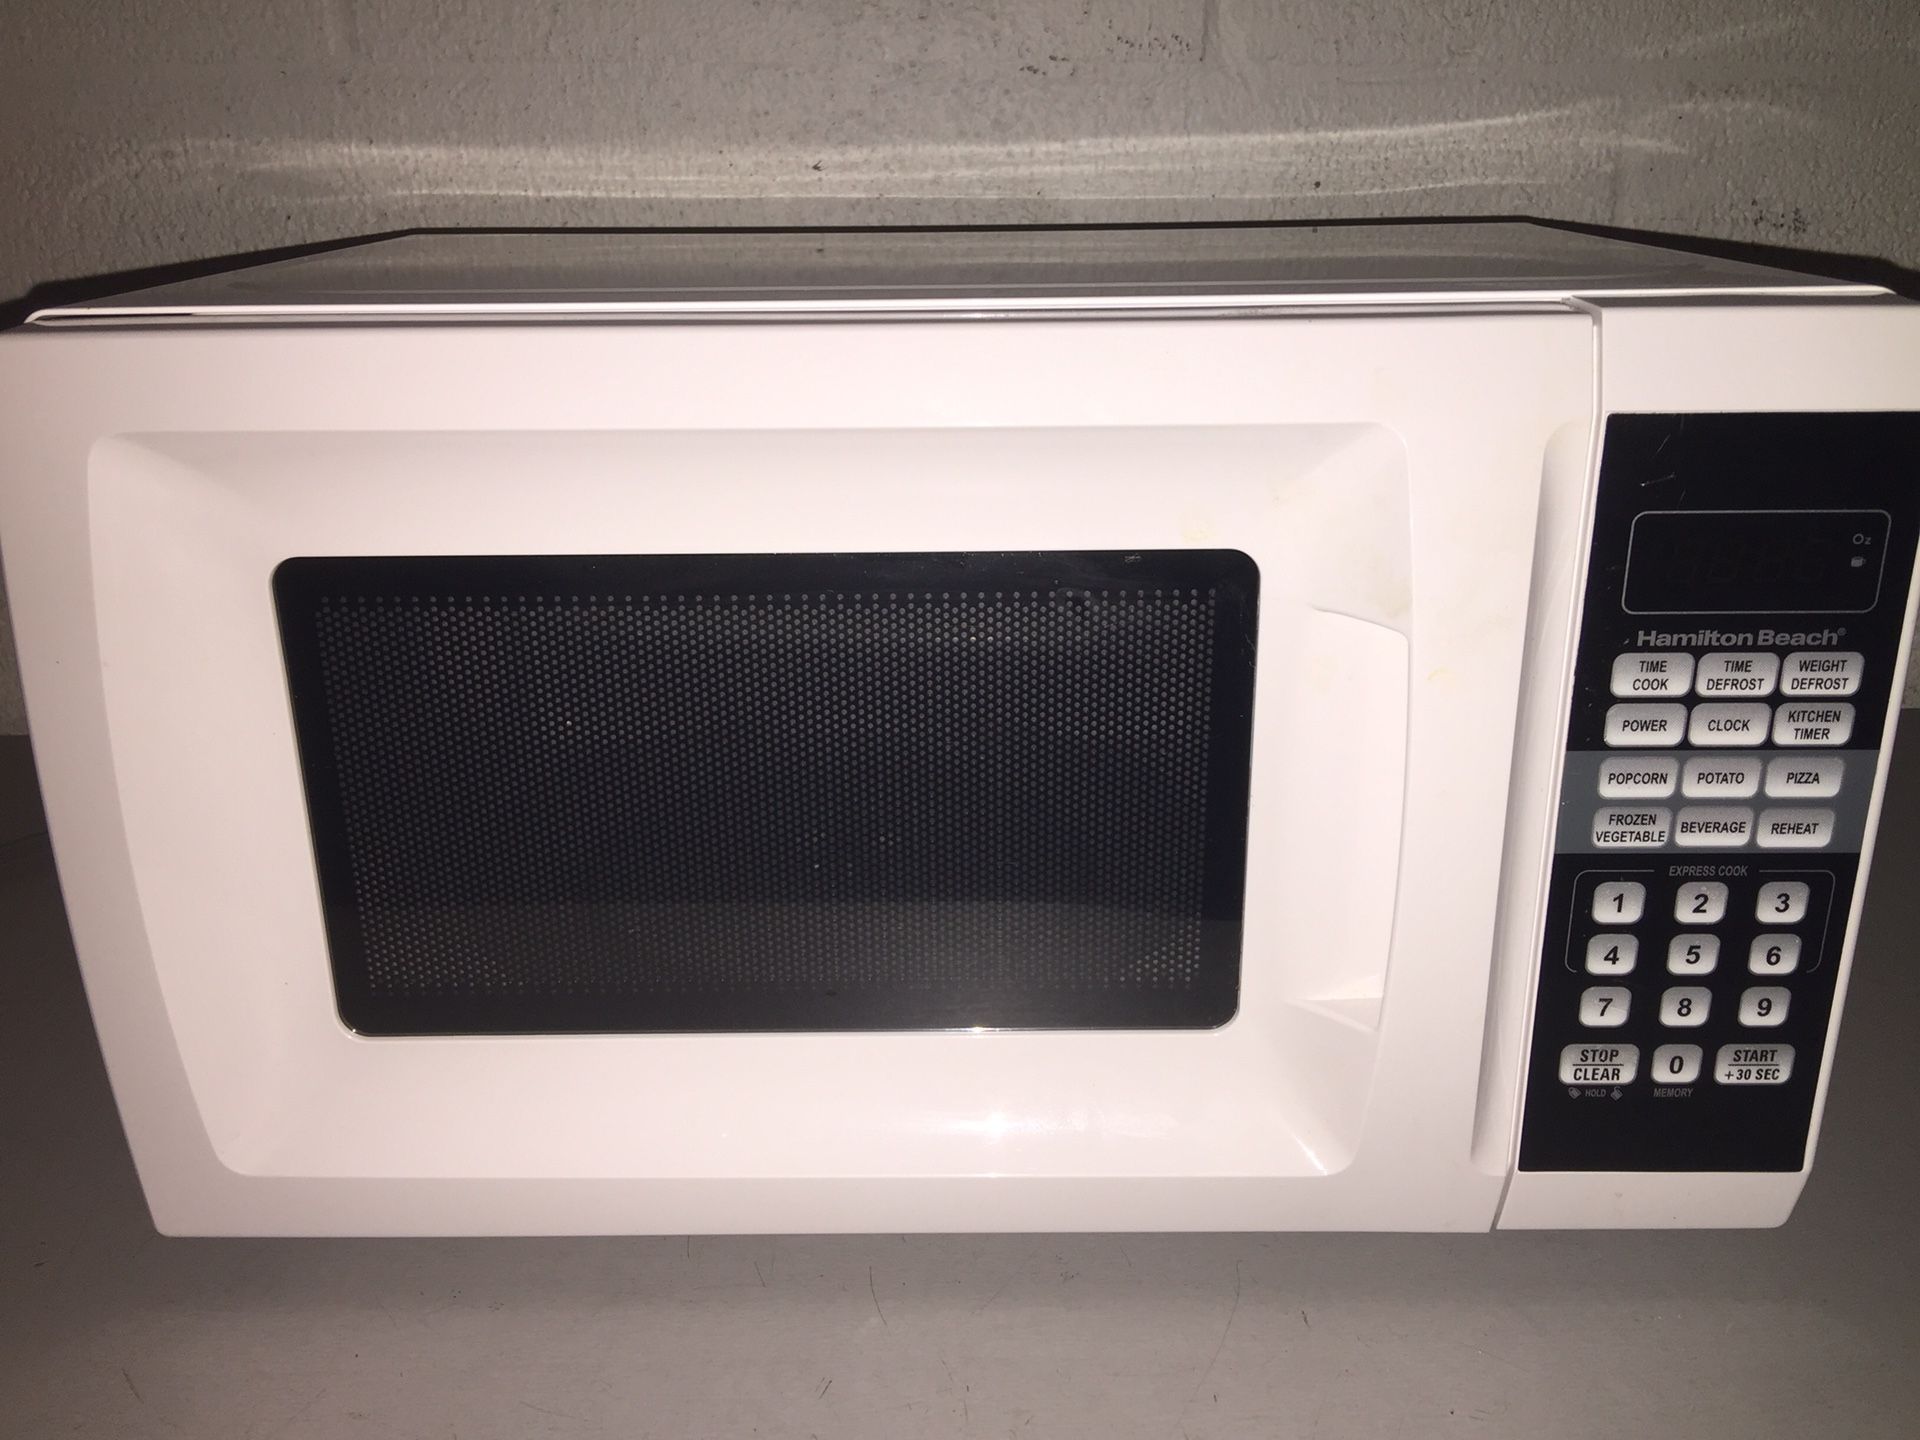 Microwave oven 700 watts